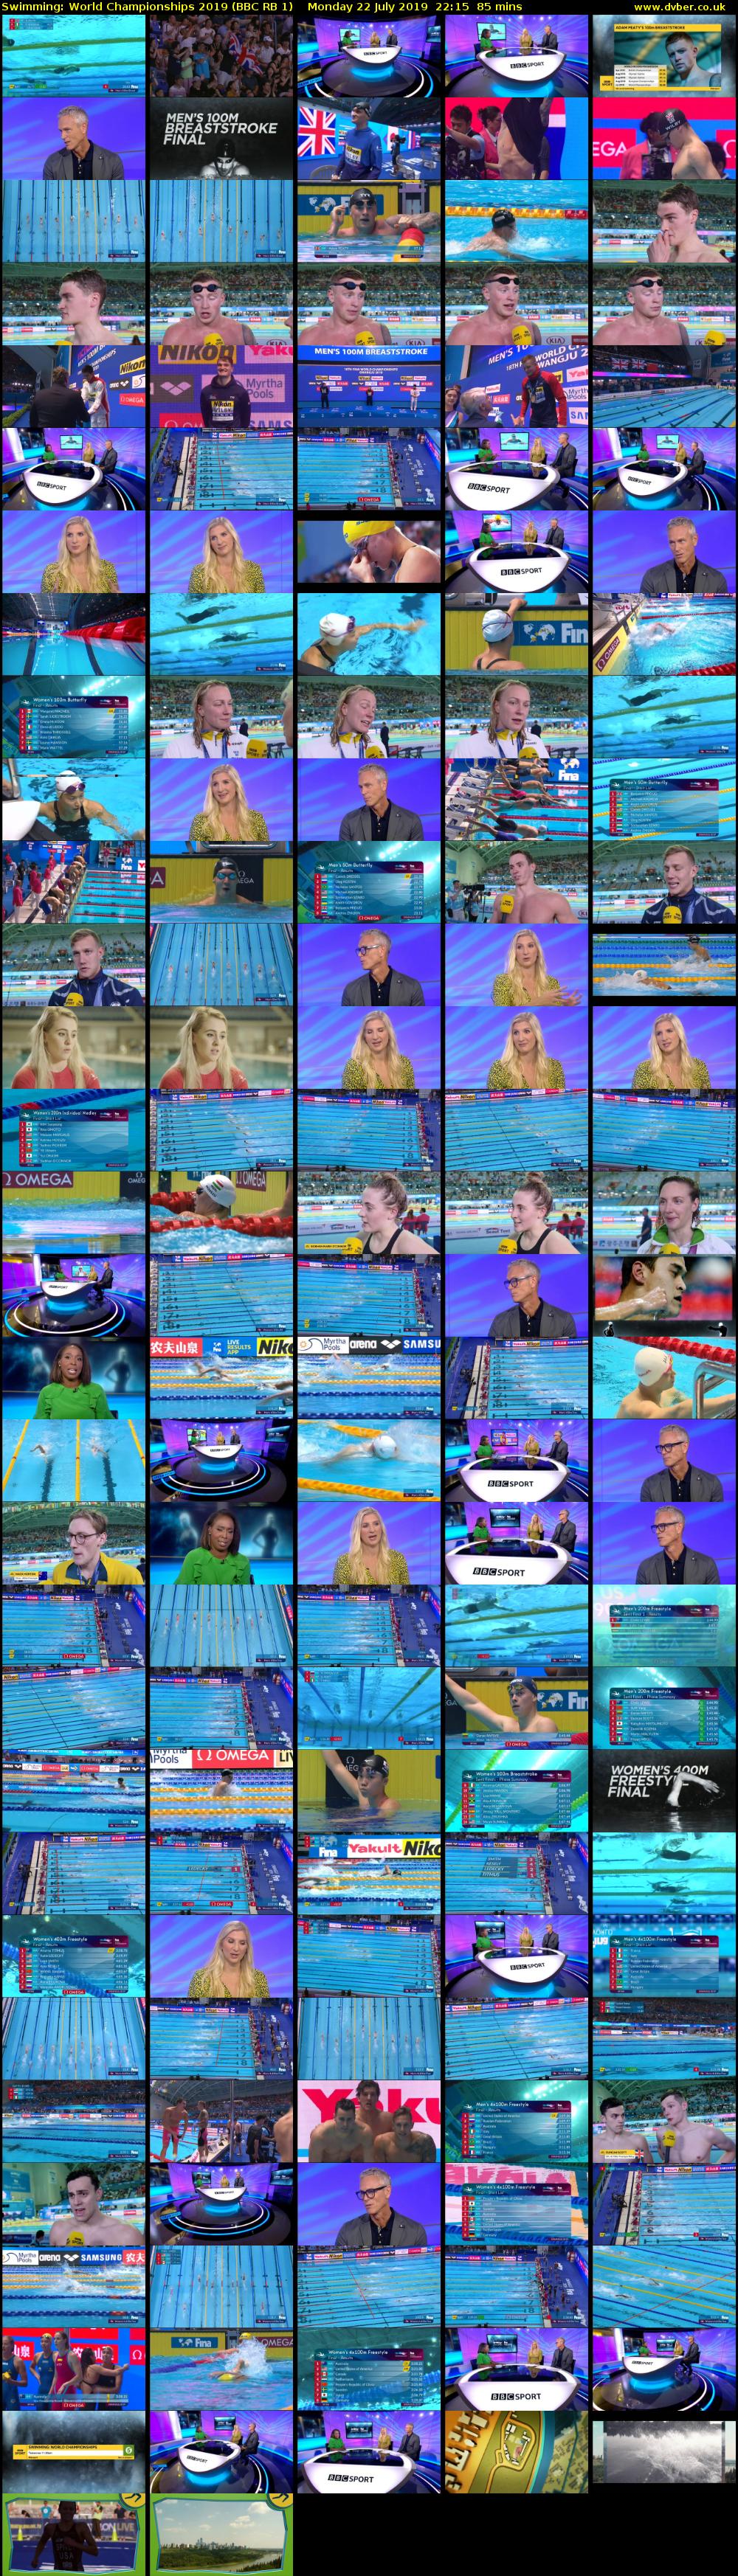 Swimming: World Championships 2019 (BBC RB 1) Monday 22 July 2019 22:15 - 23:40